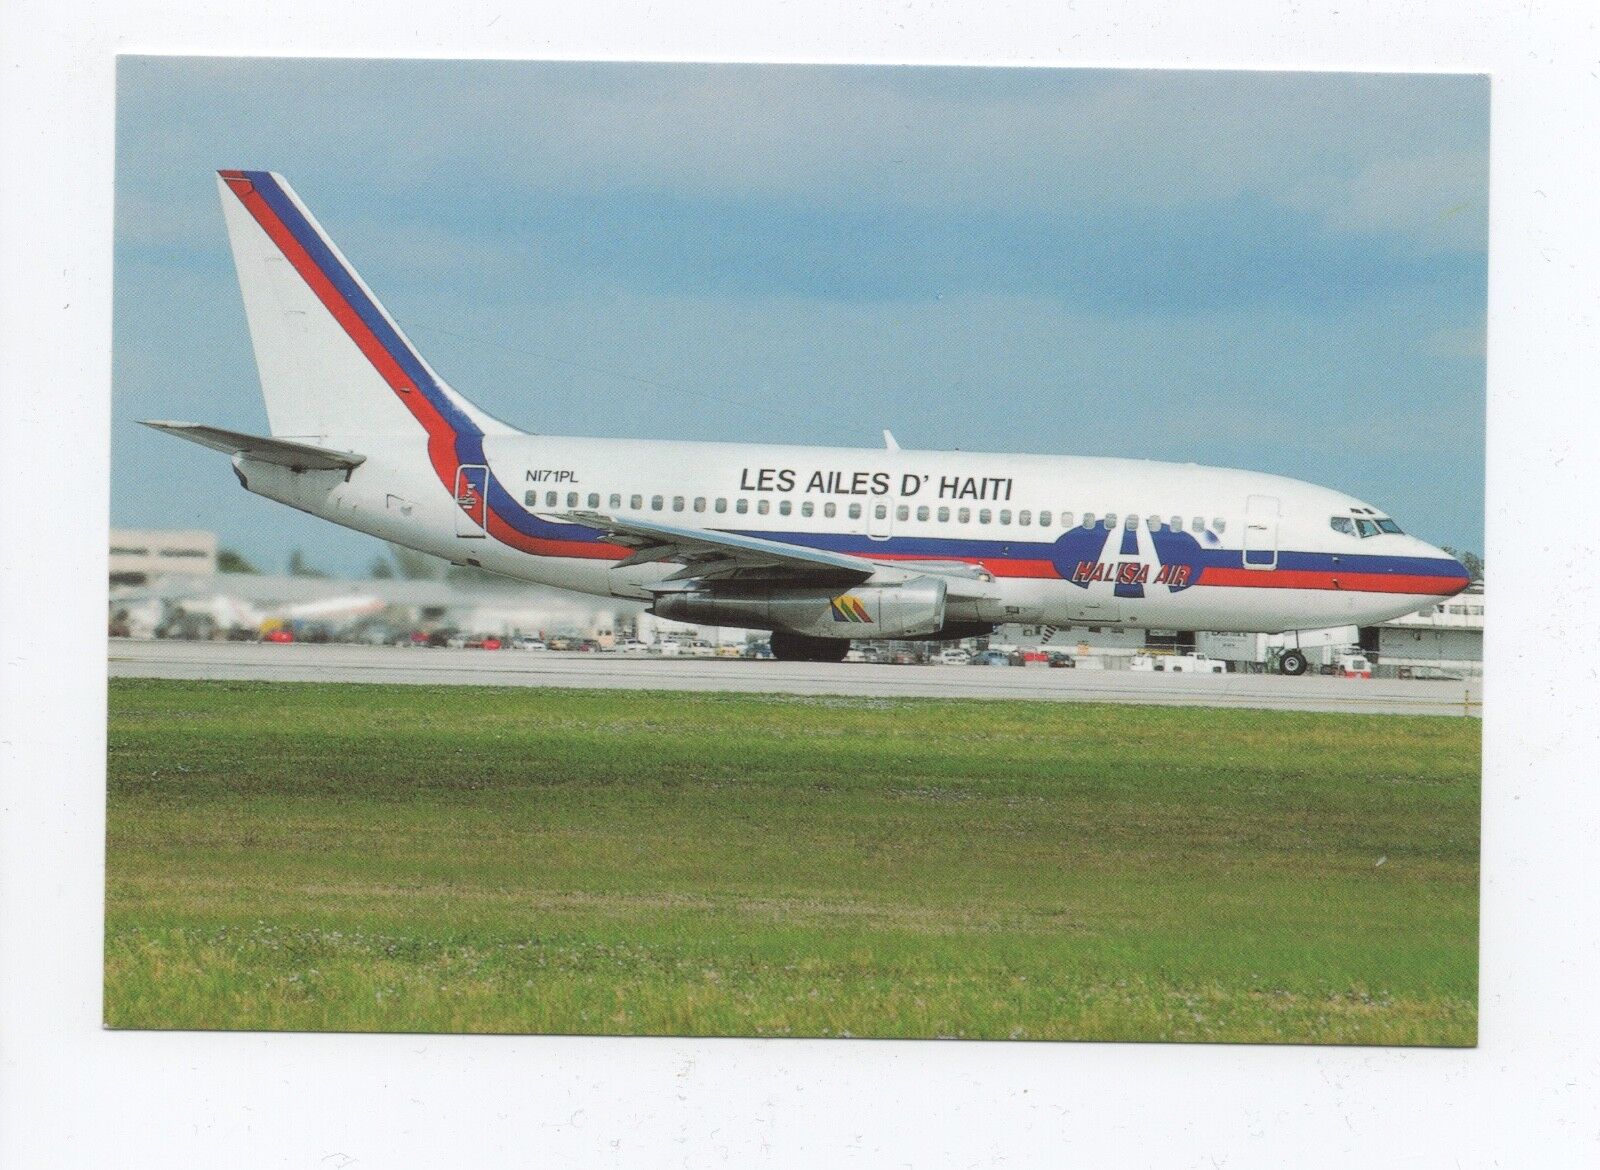 HALISA AIR B-737-2L9 N171PL w/n 22734 at Miami 01/1996 (Pocket 7)